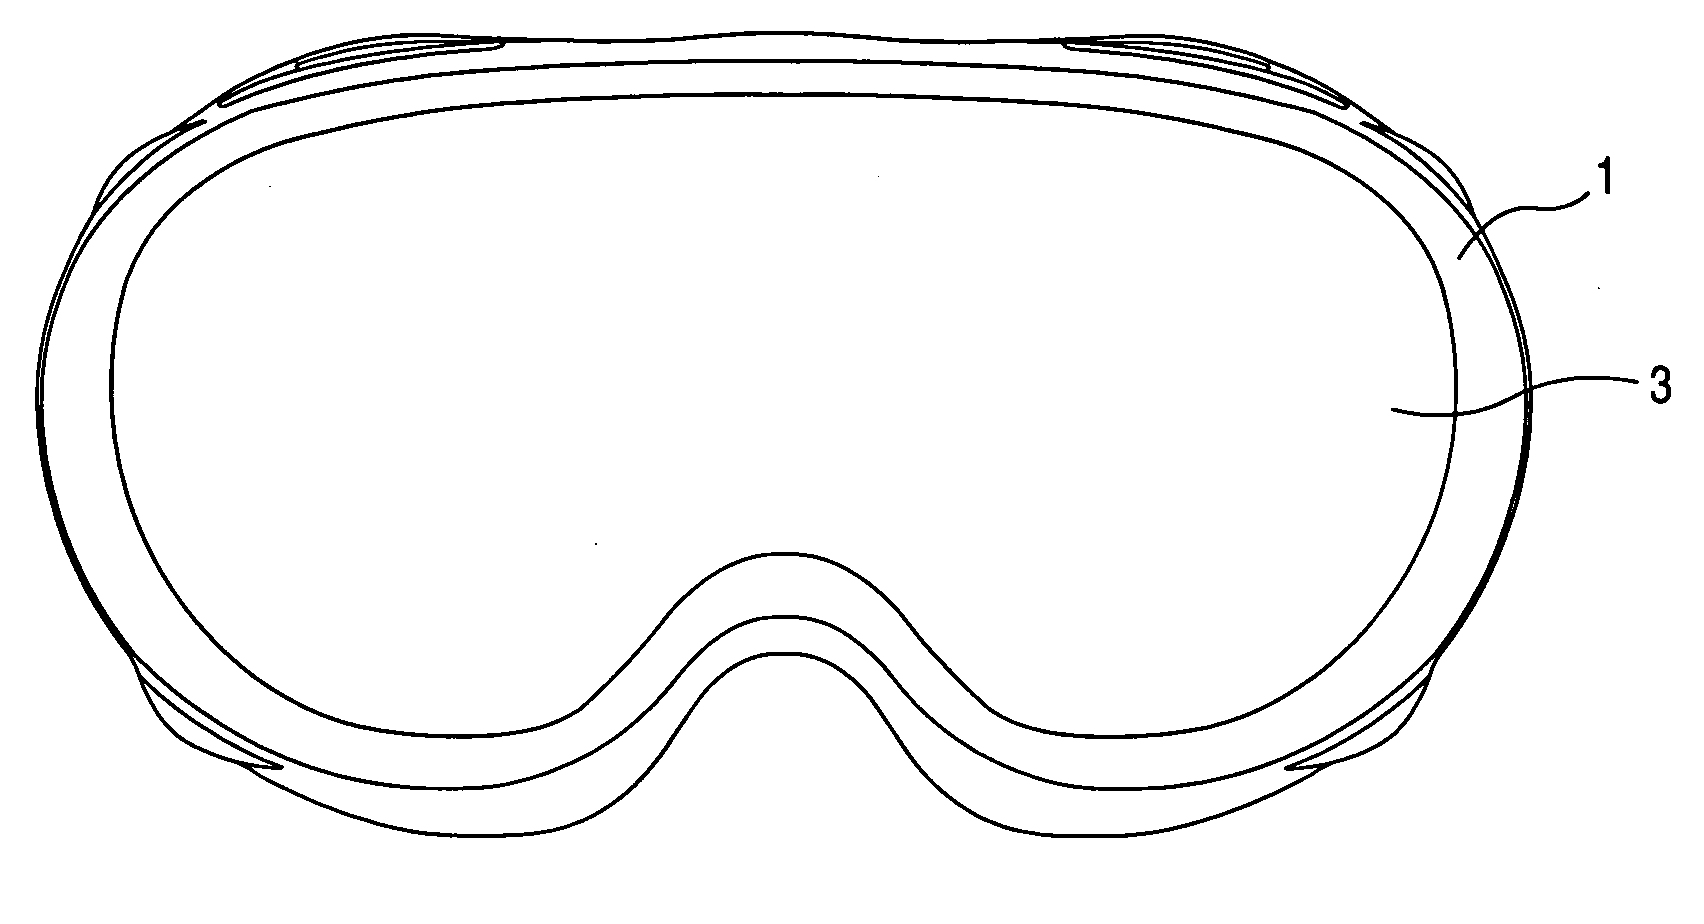 Goggle lens interchange system